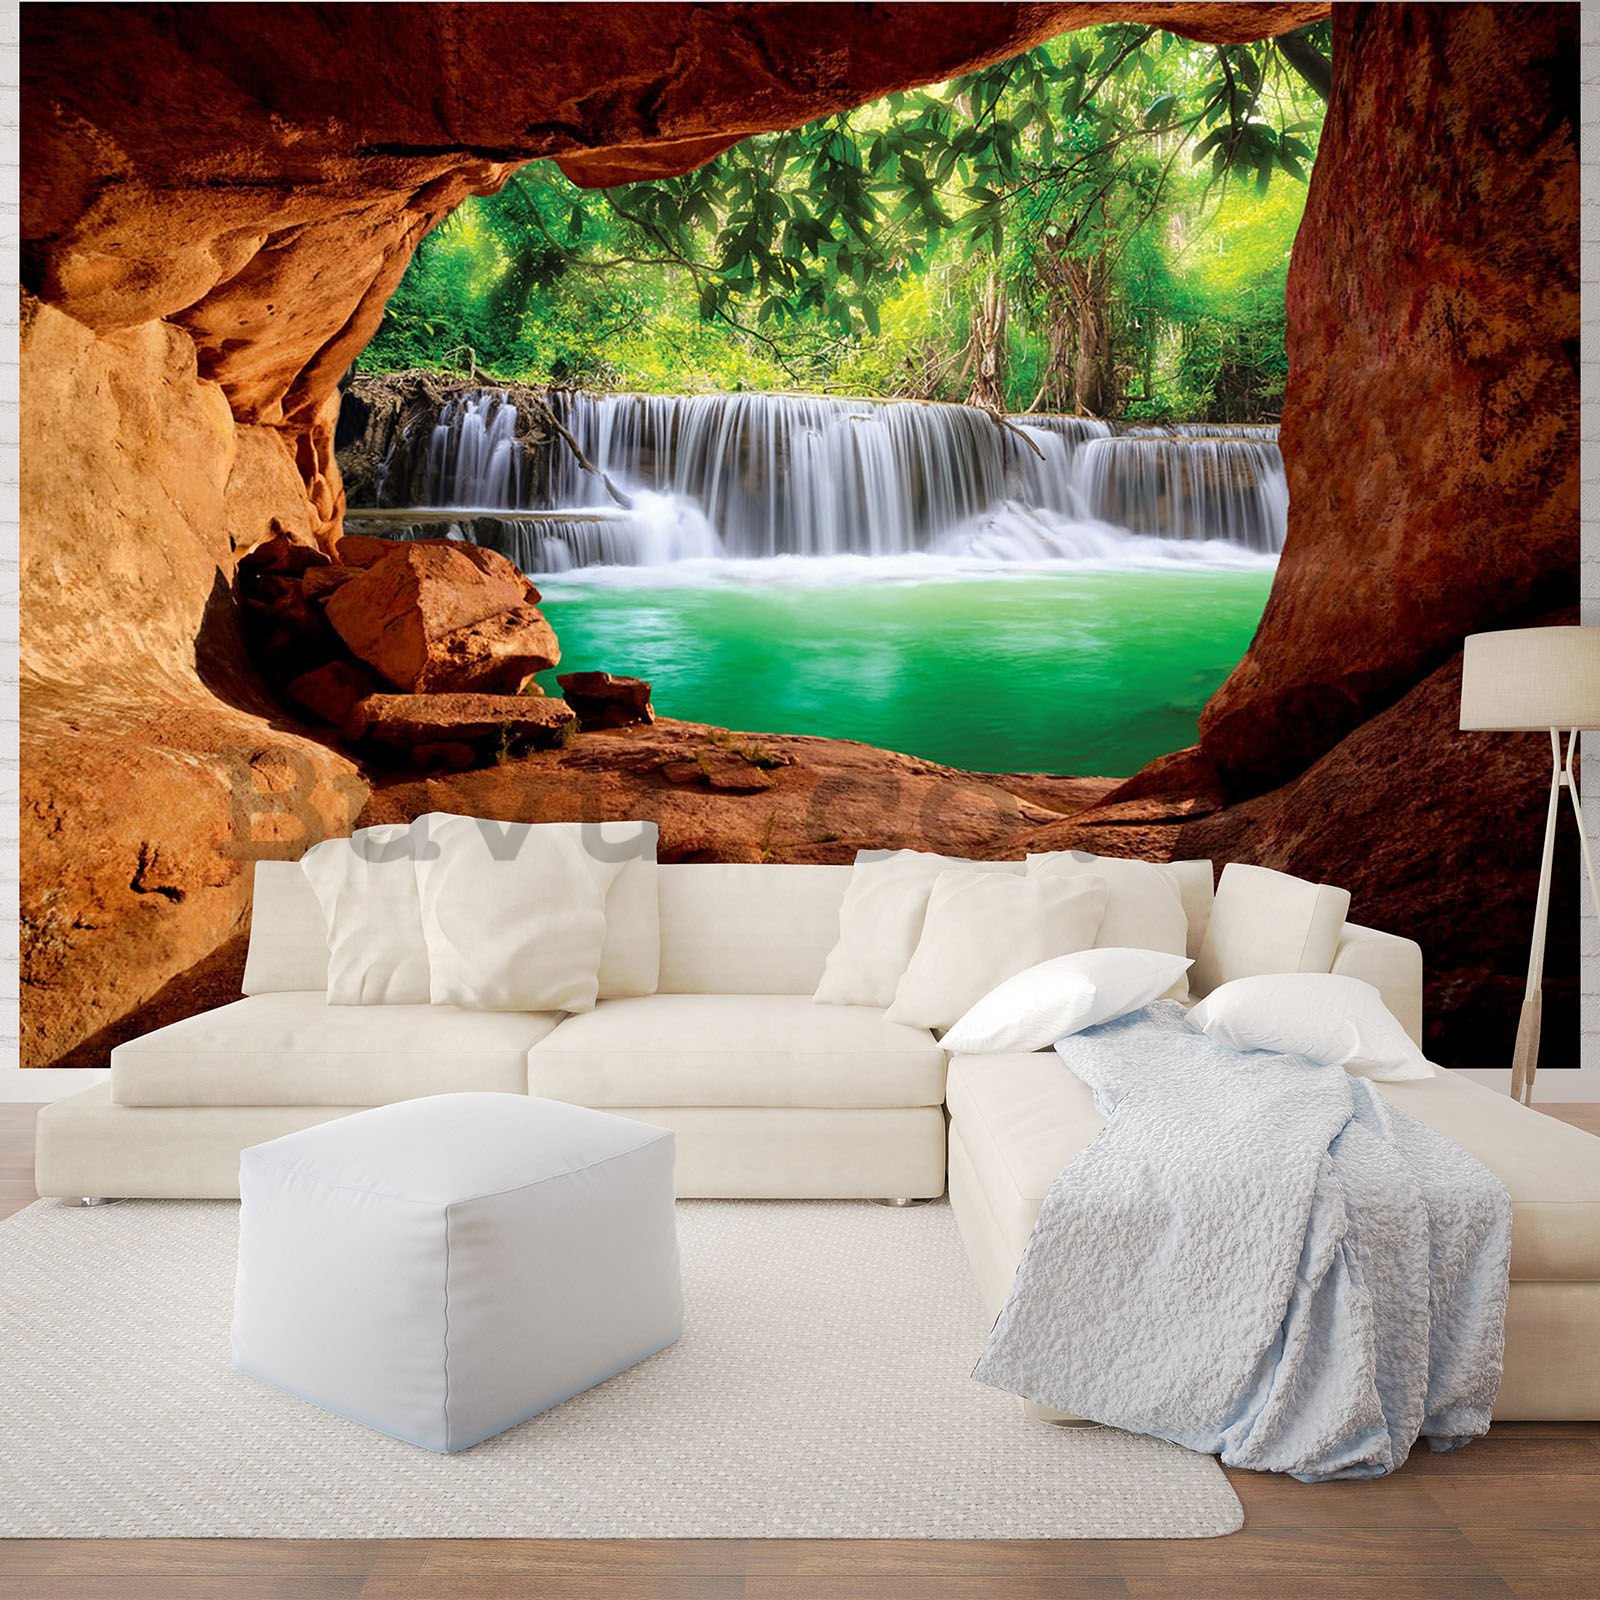 Wall mural vlies: Waterfall behind the cave - 254x184 cm